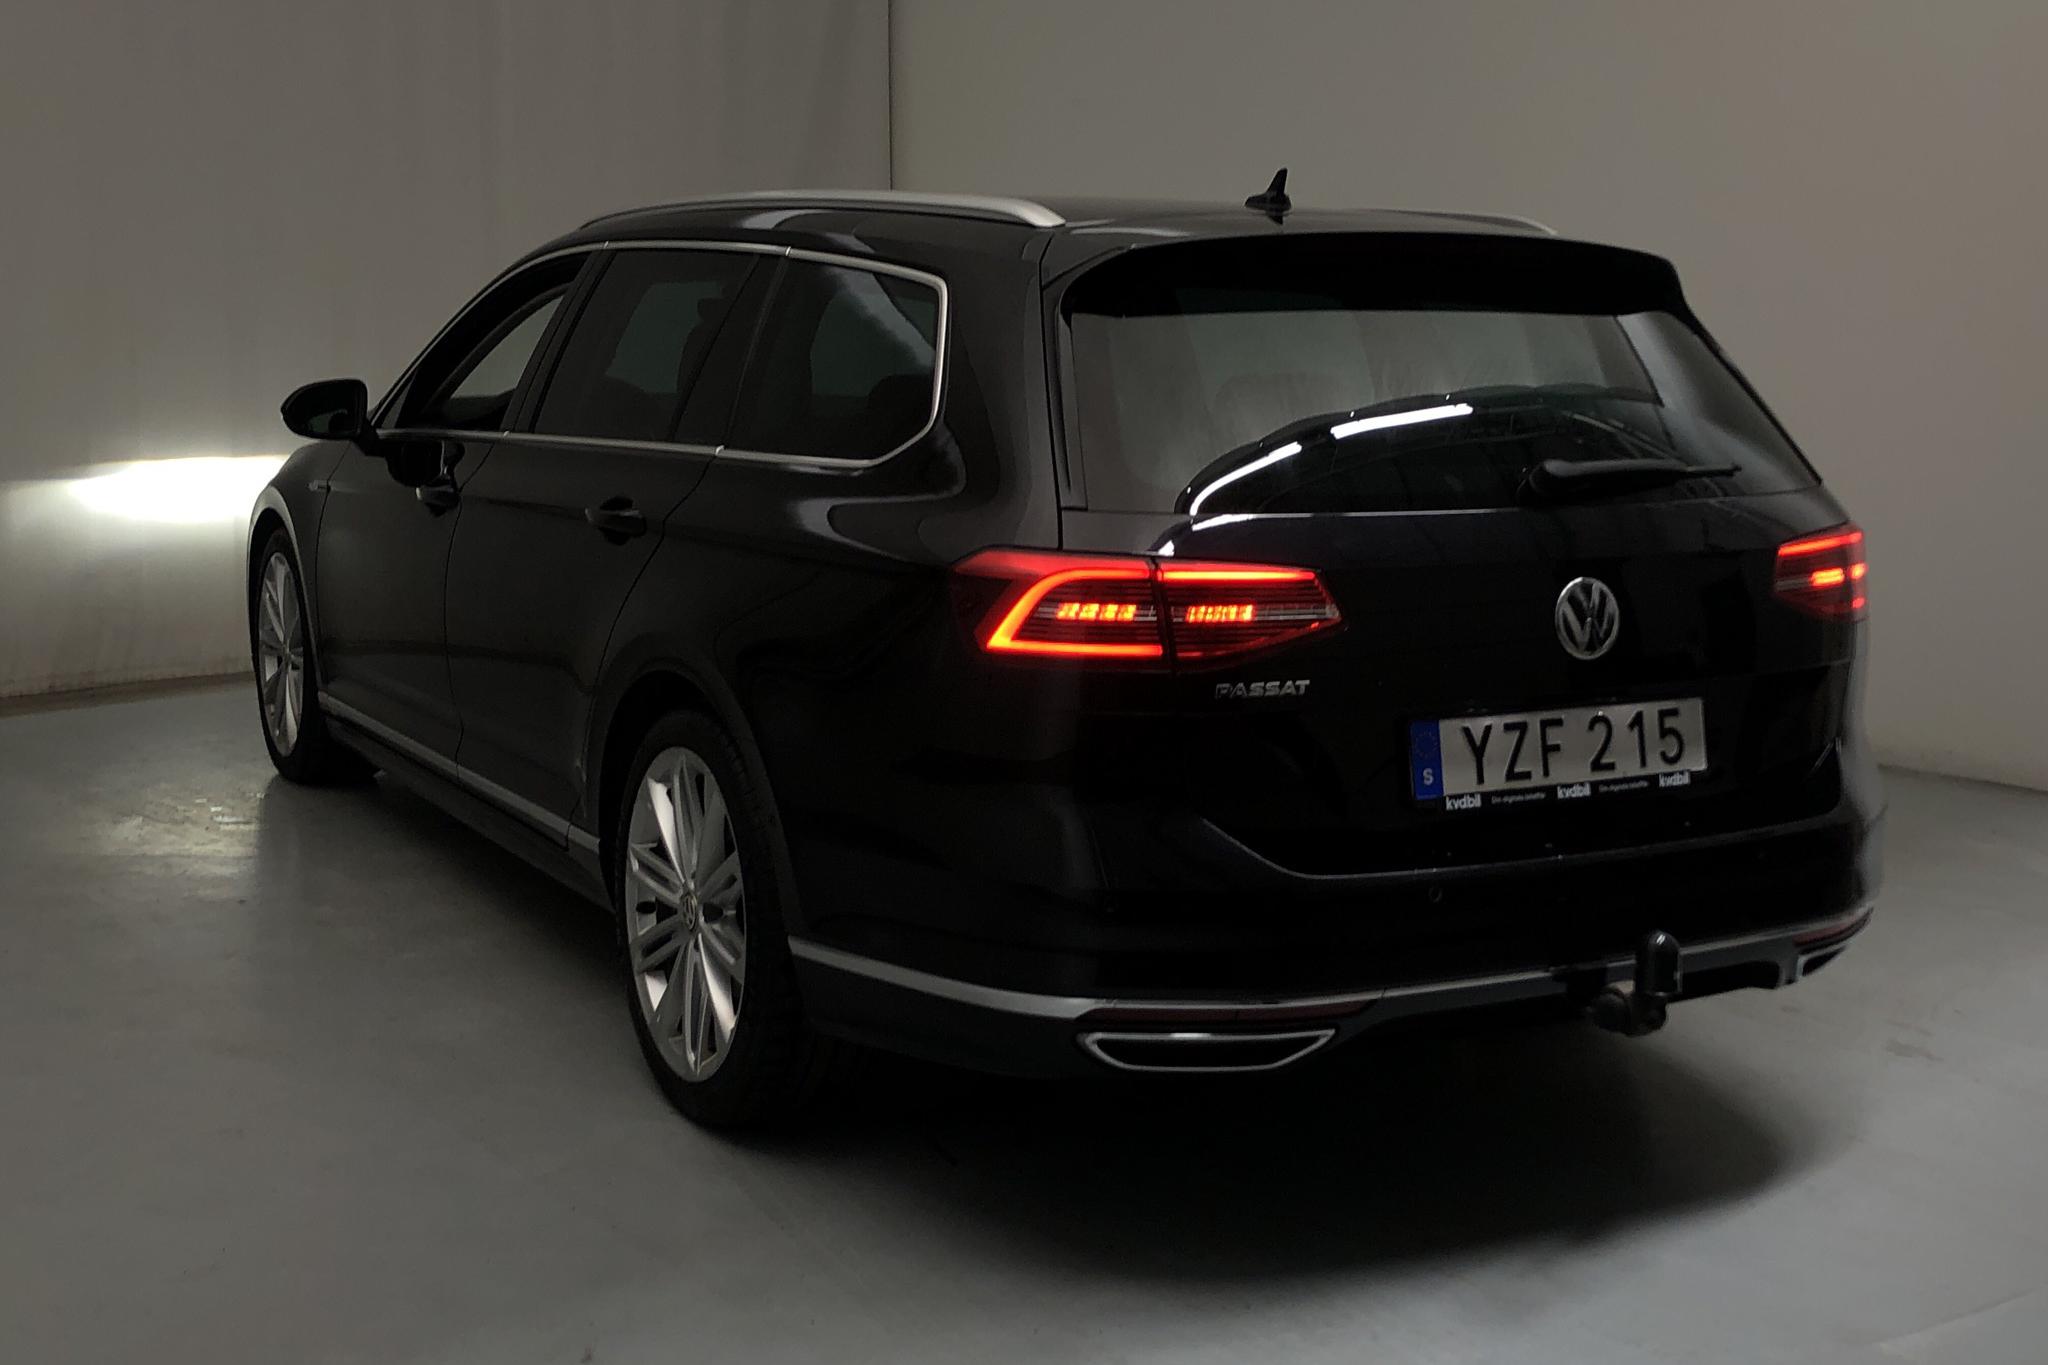 VW Passat 2.0 TDI BiTurbo Sportscombi 4MOTION (240hk) - 144 100 km - Automatic - black - 2018